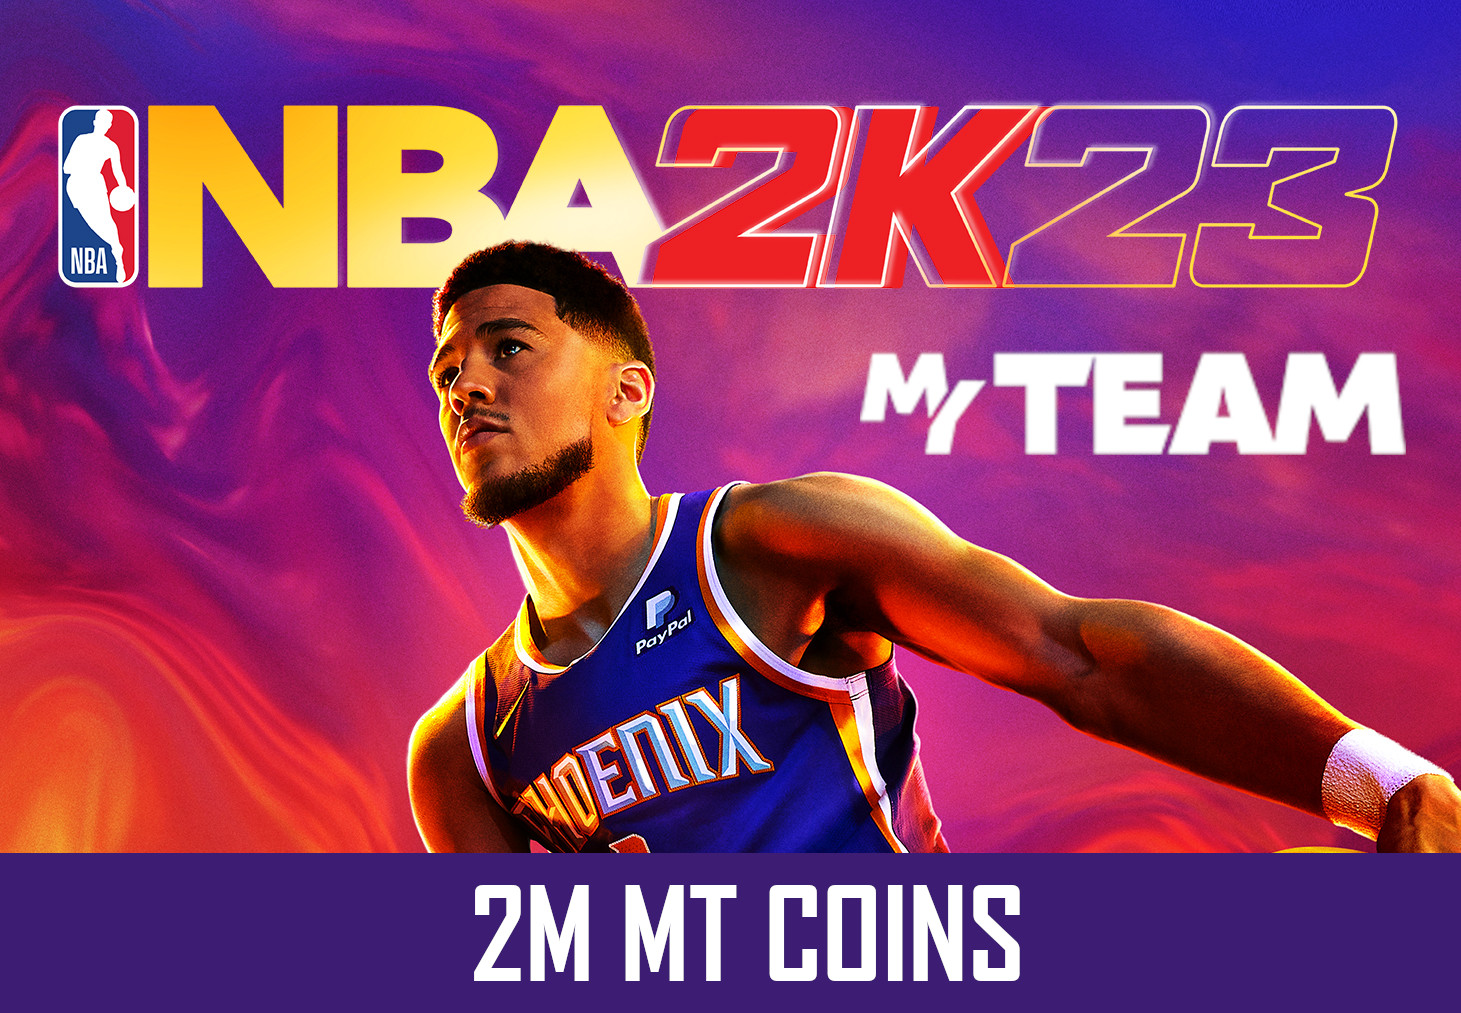 NBA 2K23 - 2M MT Coins - GLOBAL XBOX One/Series X|S